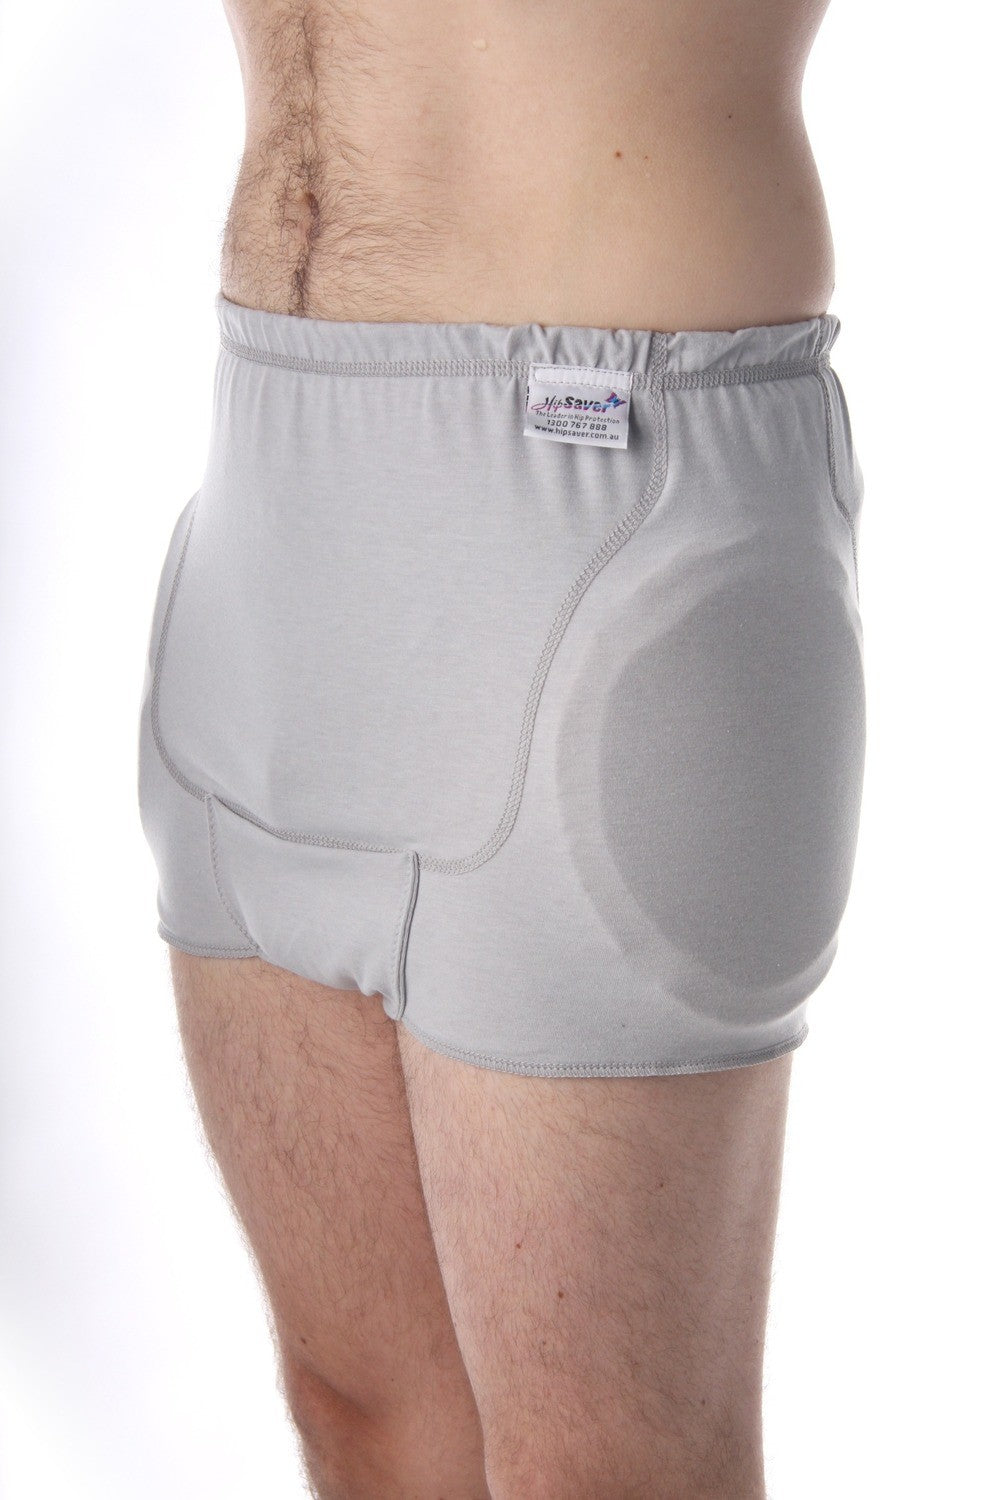 HipSaver SlimFit Veterans Kit Male Large -Hips 103-114cm